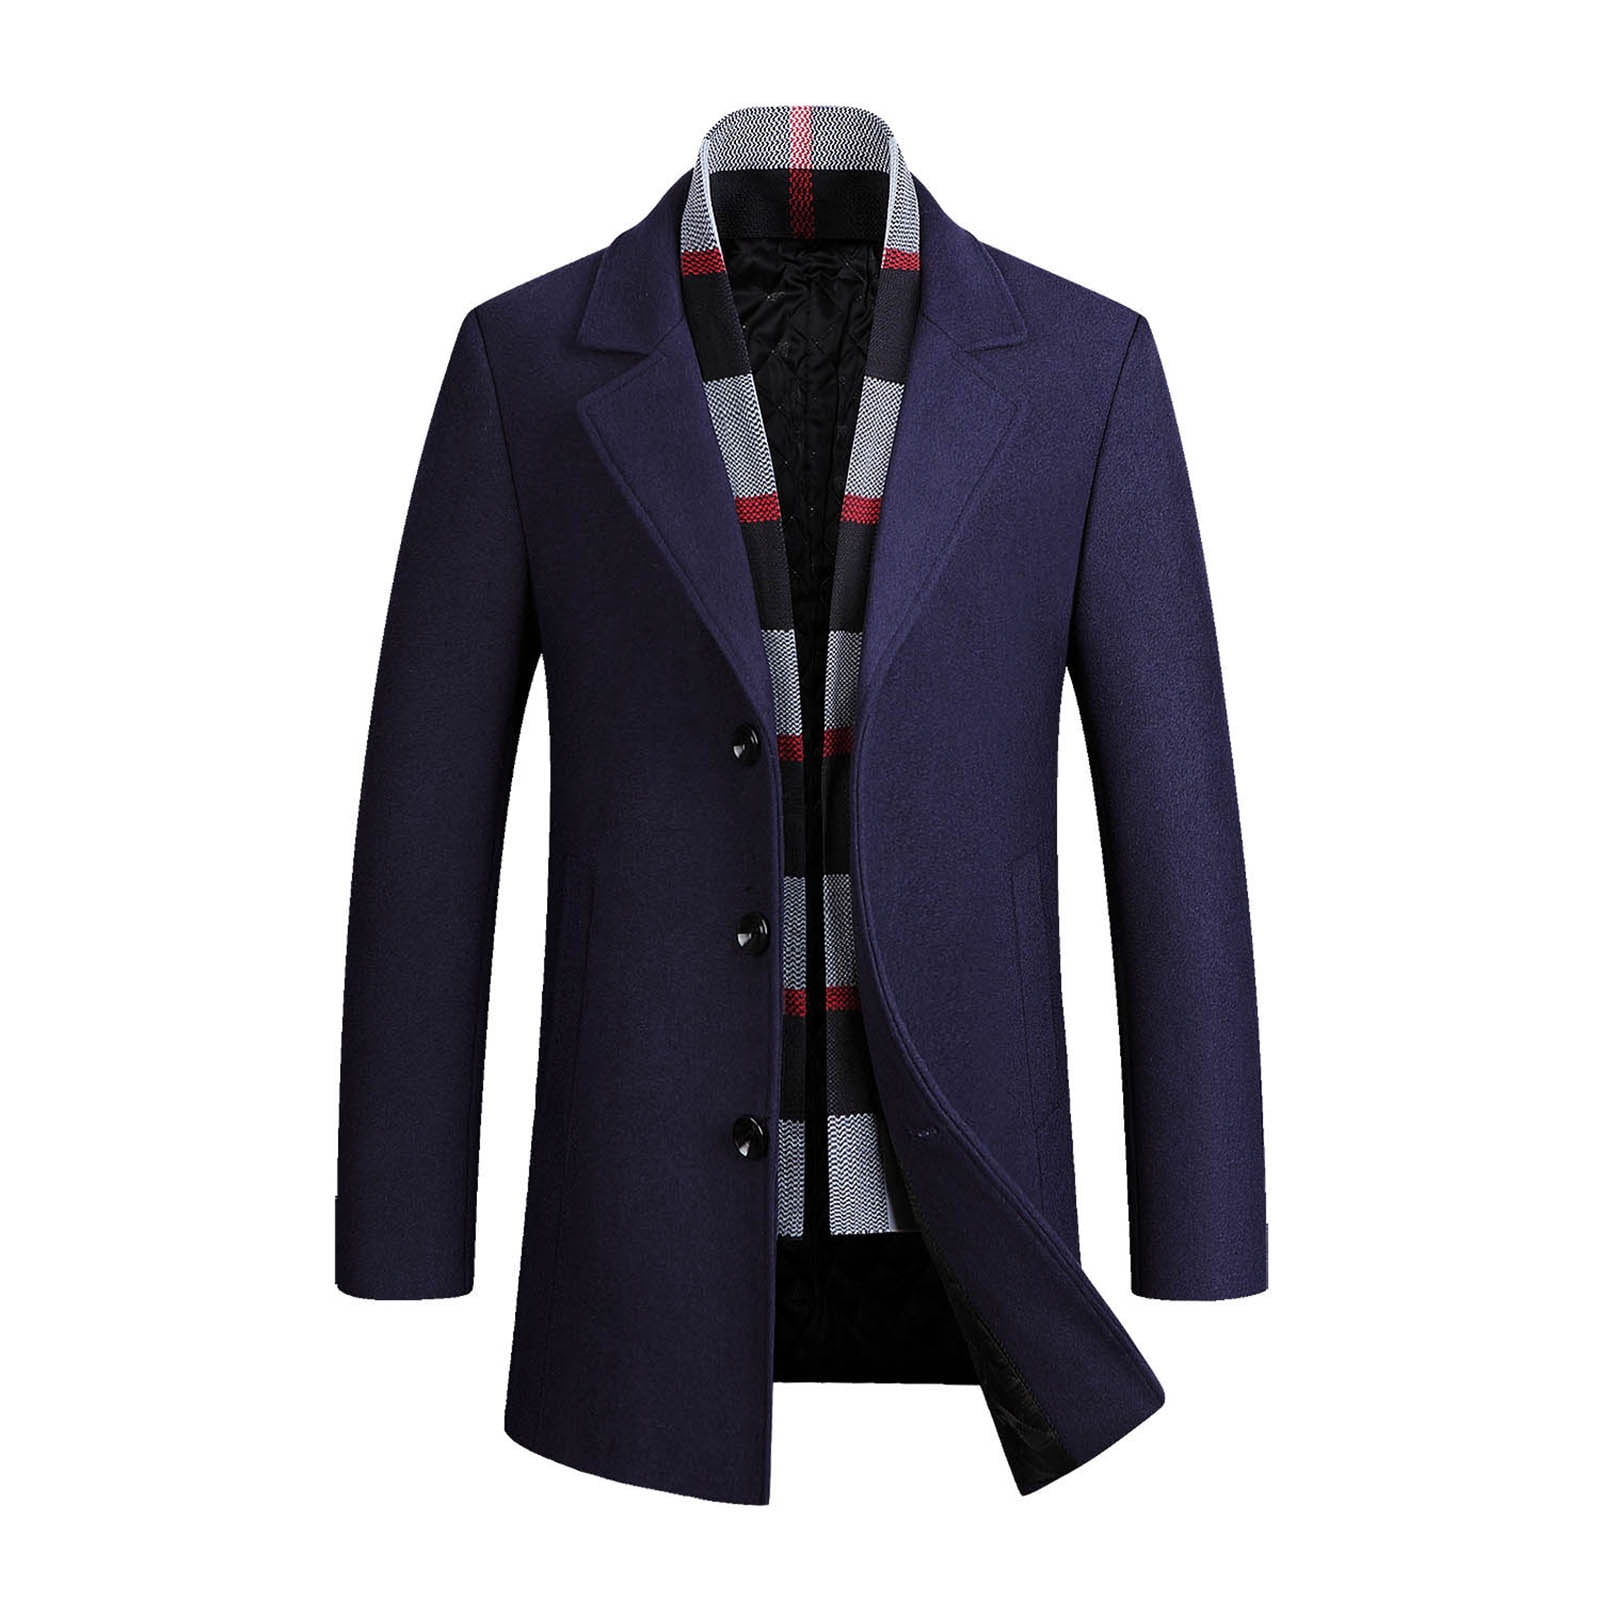 Thread & Supply Women's Fleece Pullover Jacket (Black, XXL)